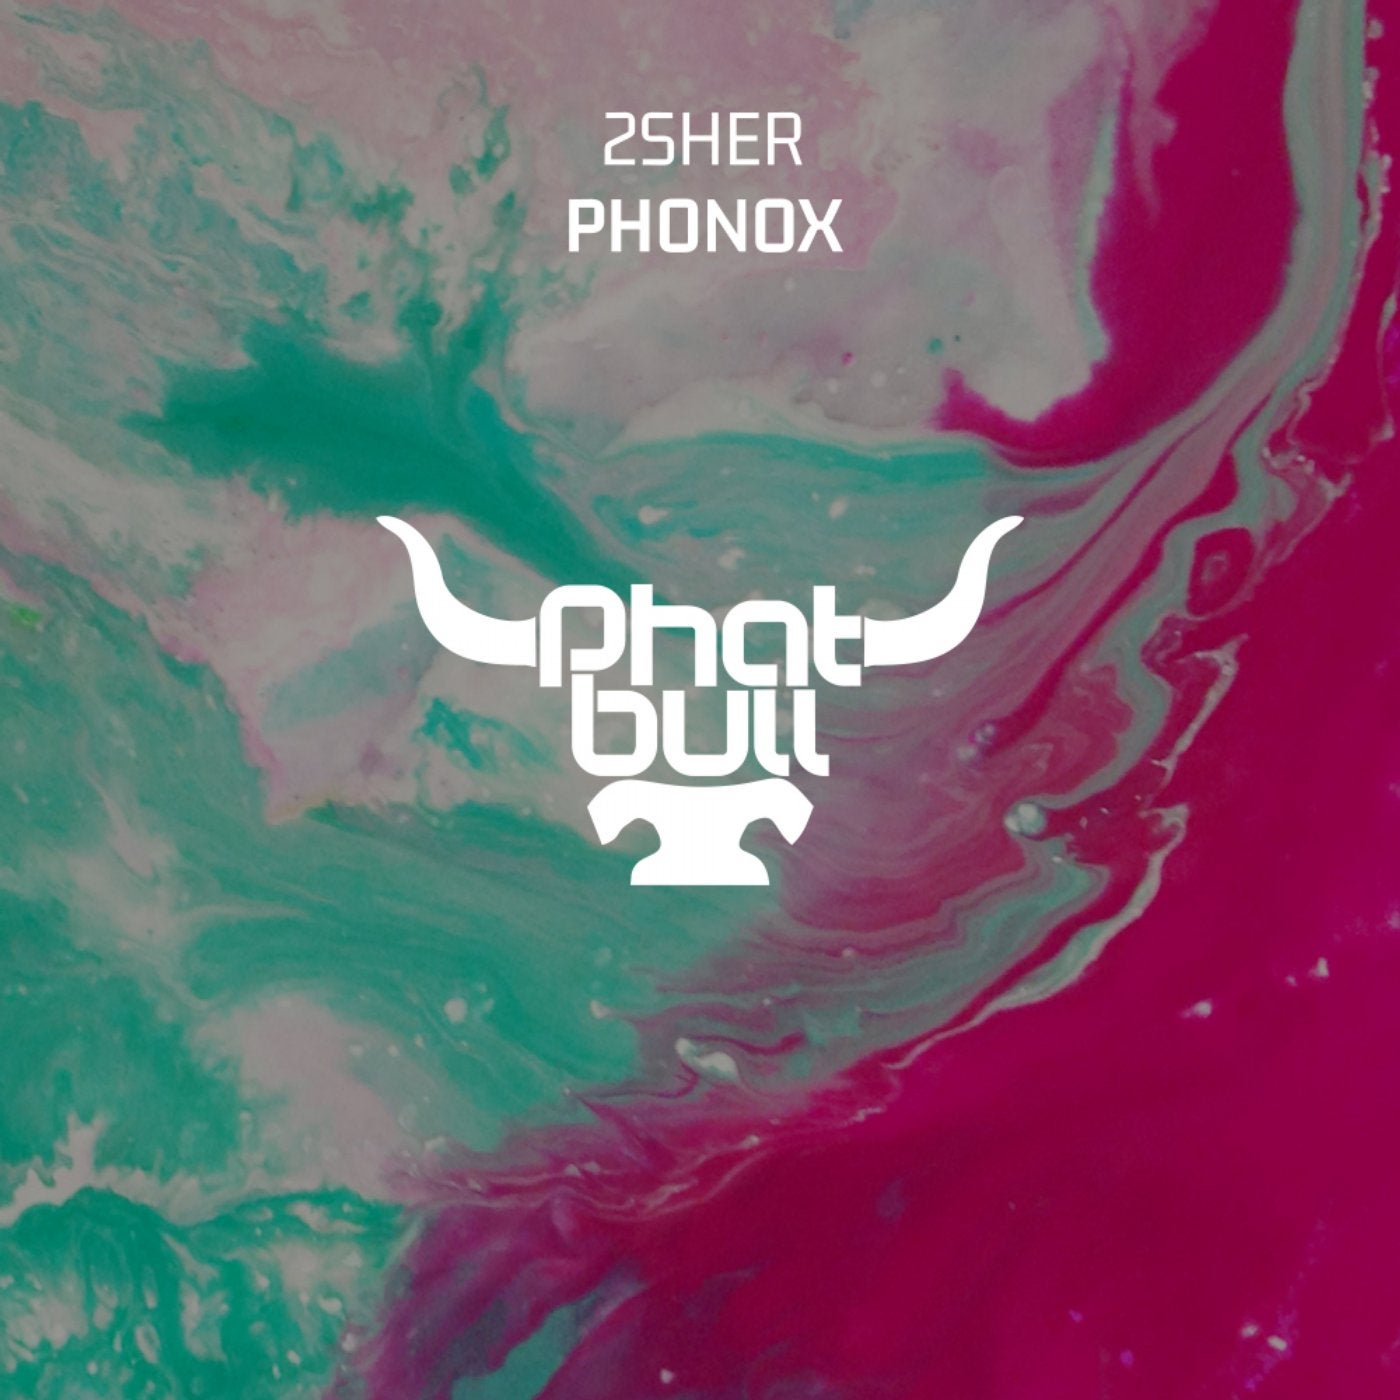 Phonox